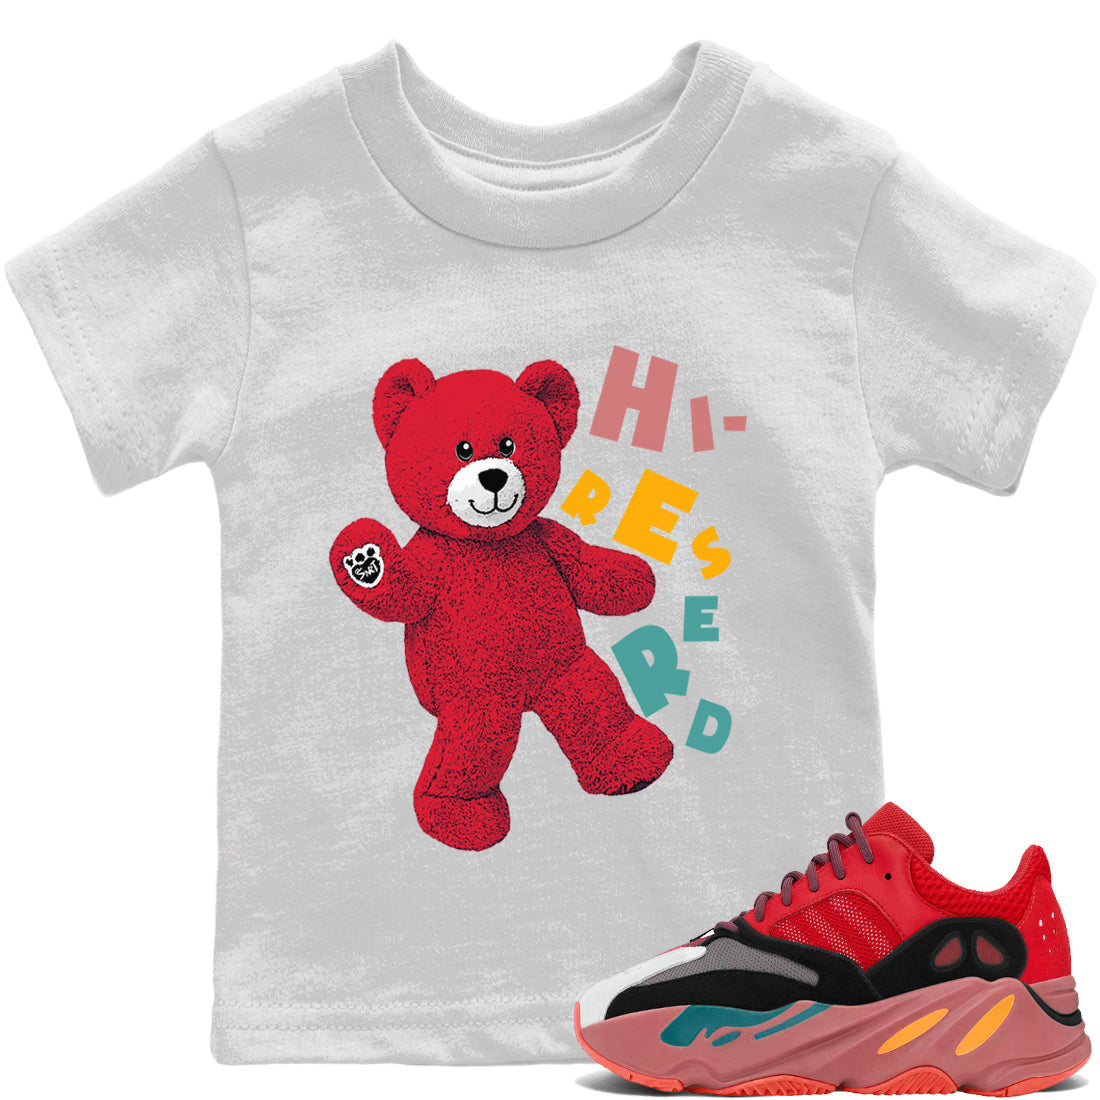 Yeezy 700 Hi-Res Red Sneaker Match Tees Hello Bear Sneaker Tees Yeezy 700 Hi-Res Red Sneaker Release Tees Kids Shirts